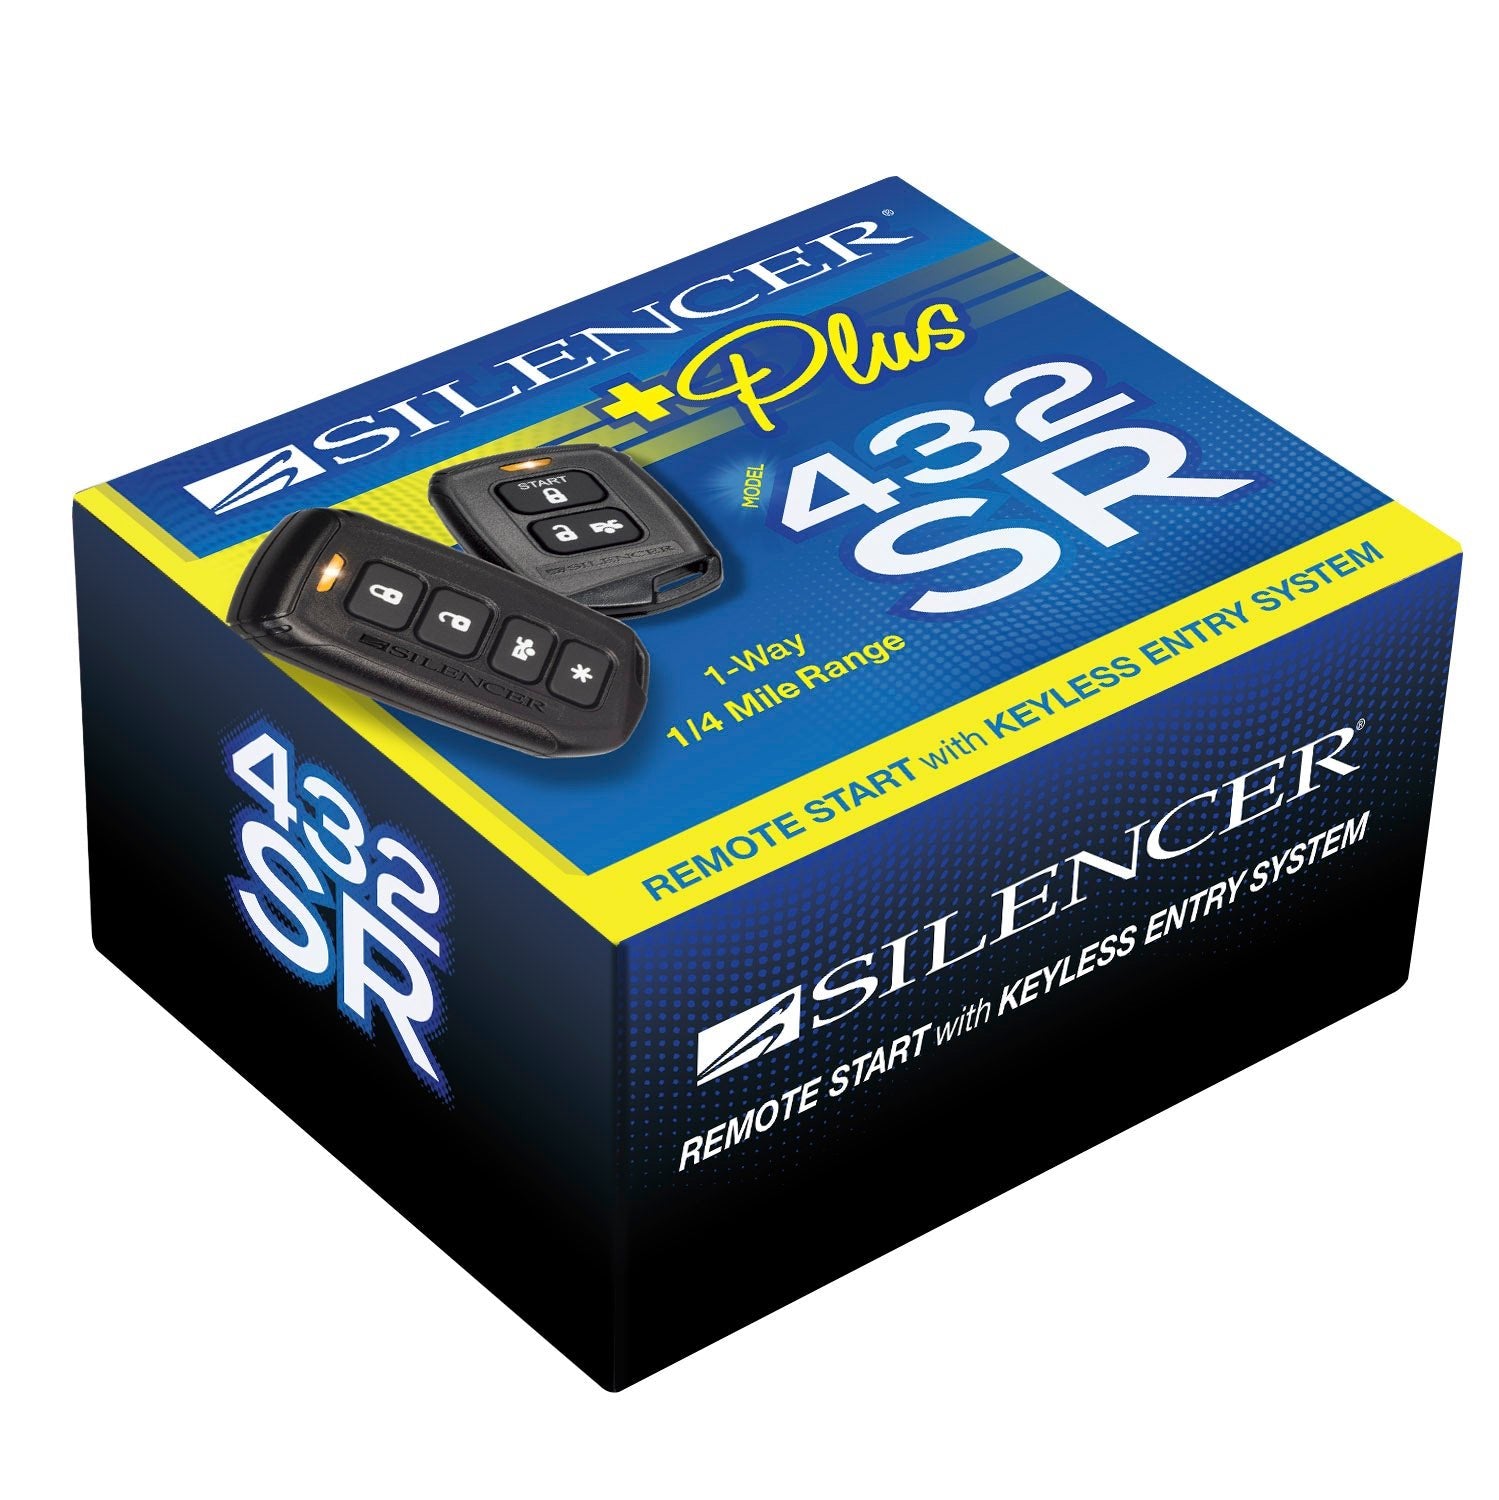 Silencer Plus 432SR | 1 Way | 1/4 Mile Range Remote Start & Keyless Entry